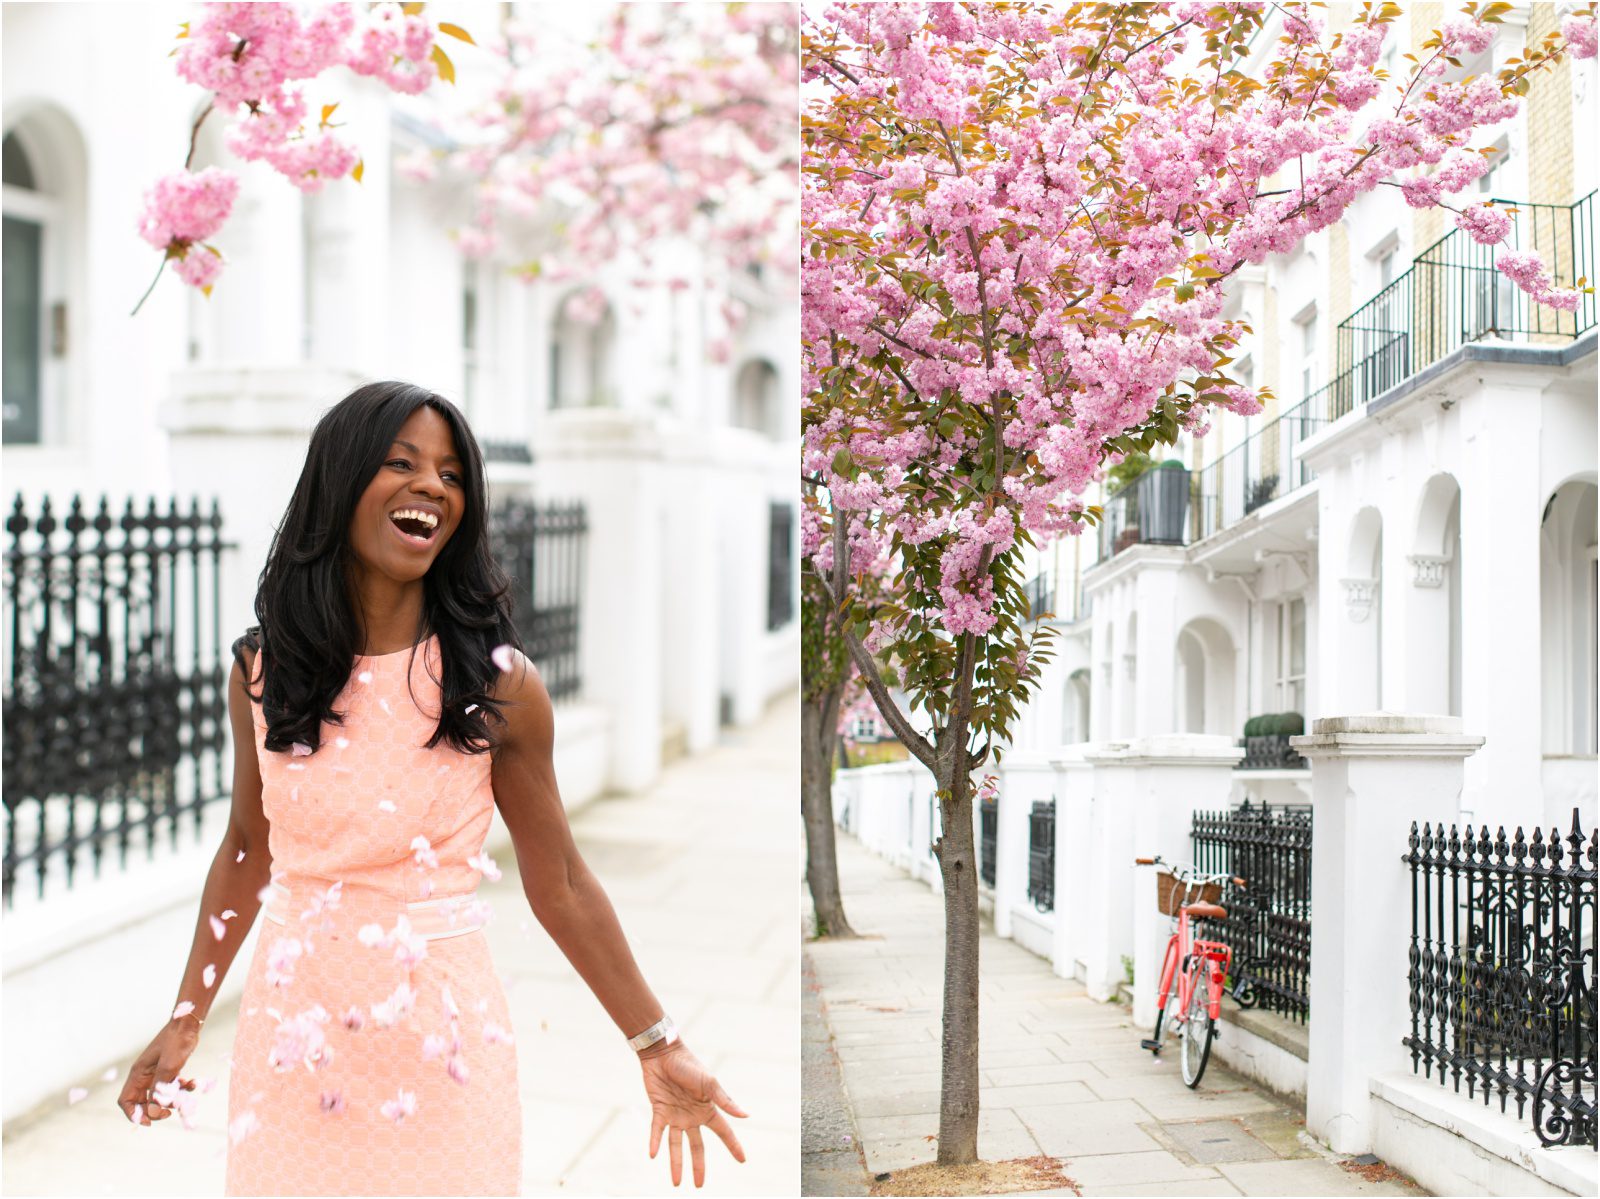 London cherry blossom photos